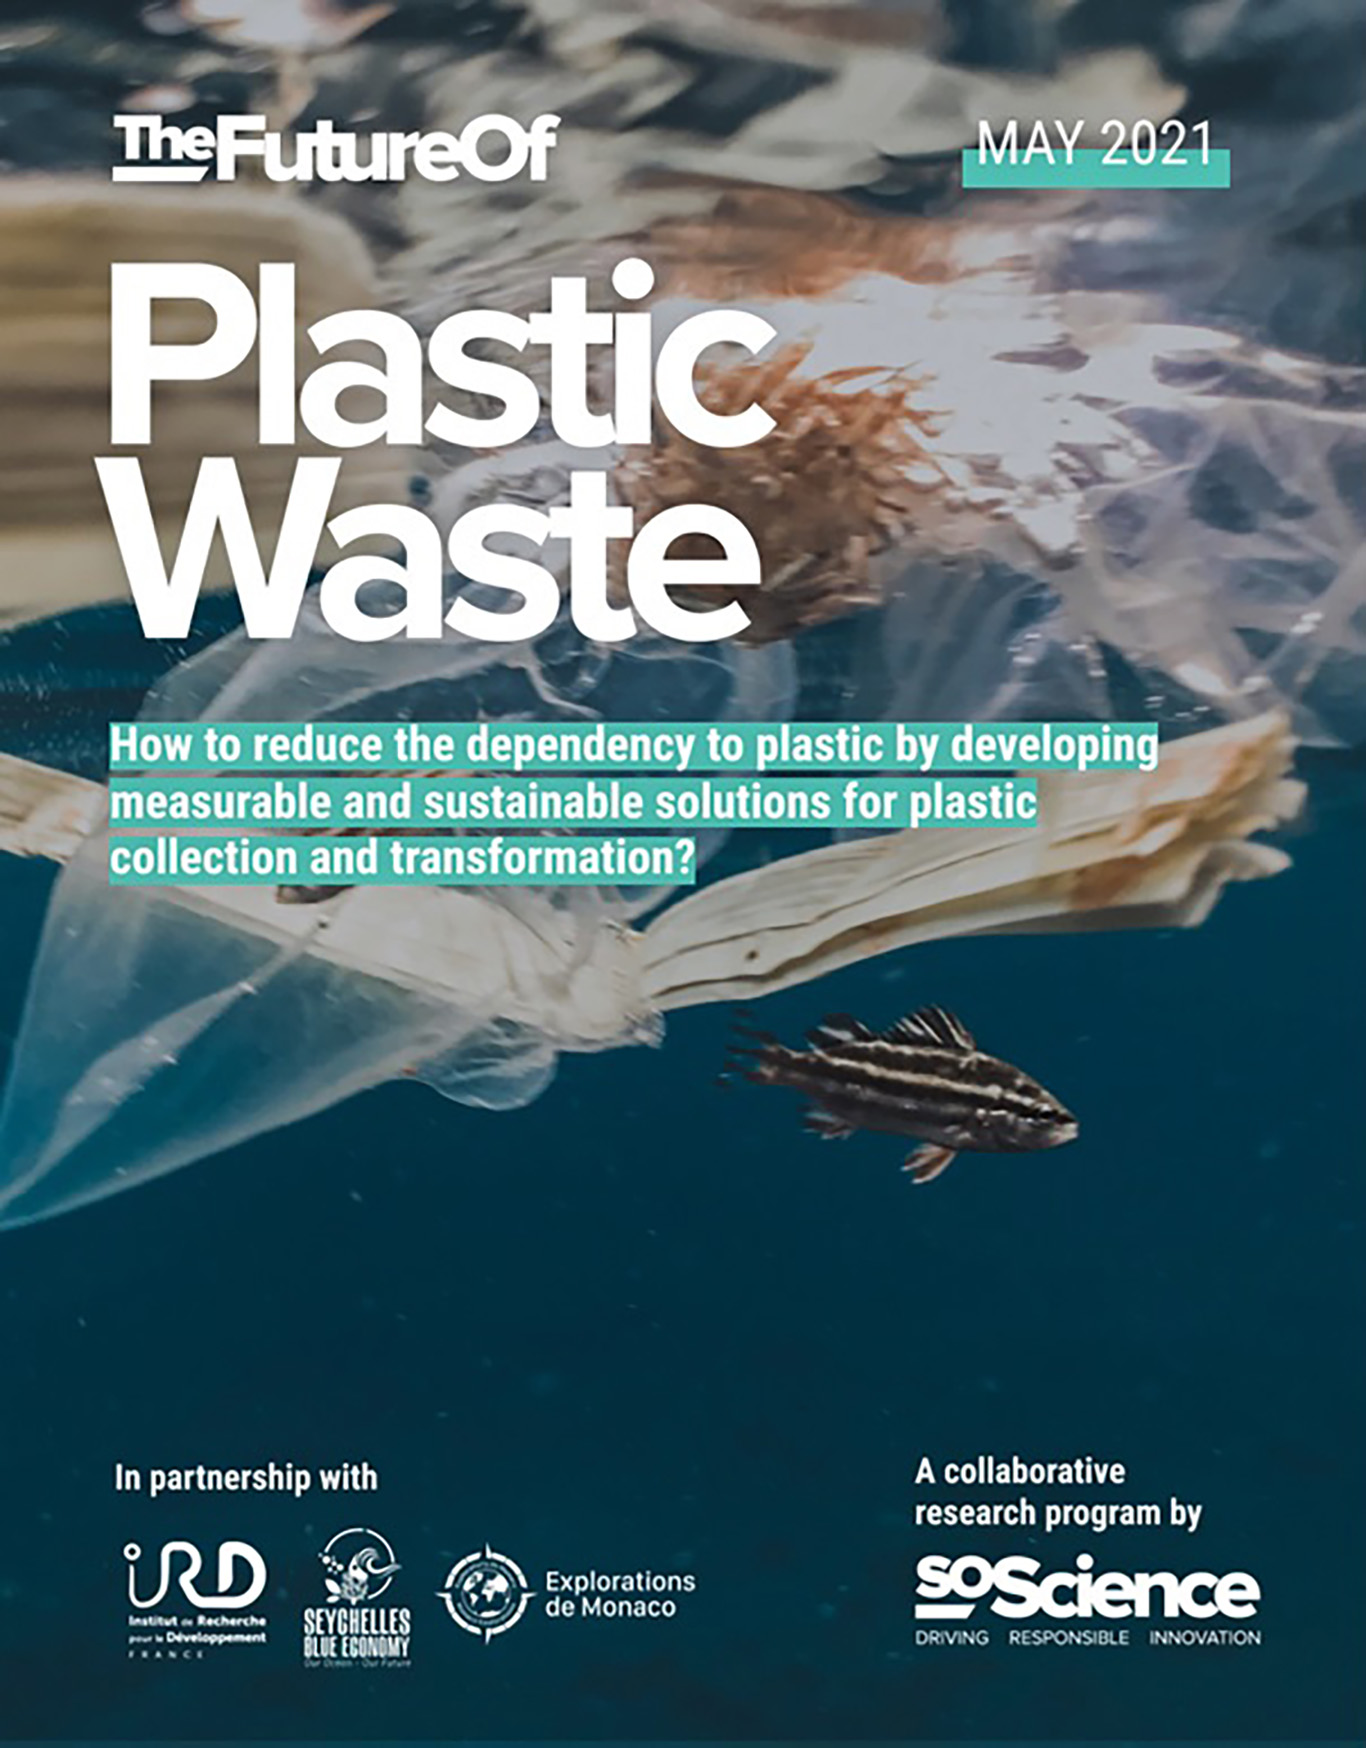 The Futur of Plastic Waste in Seychelles